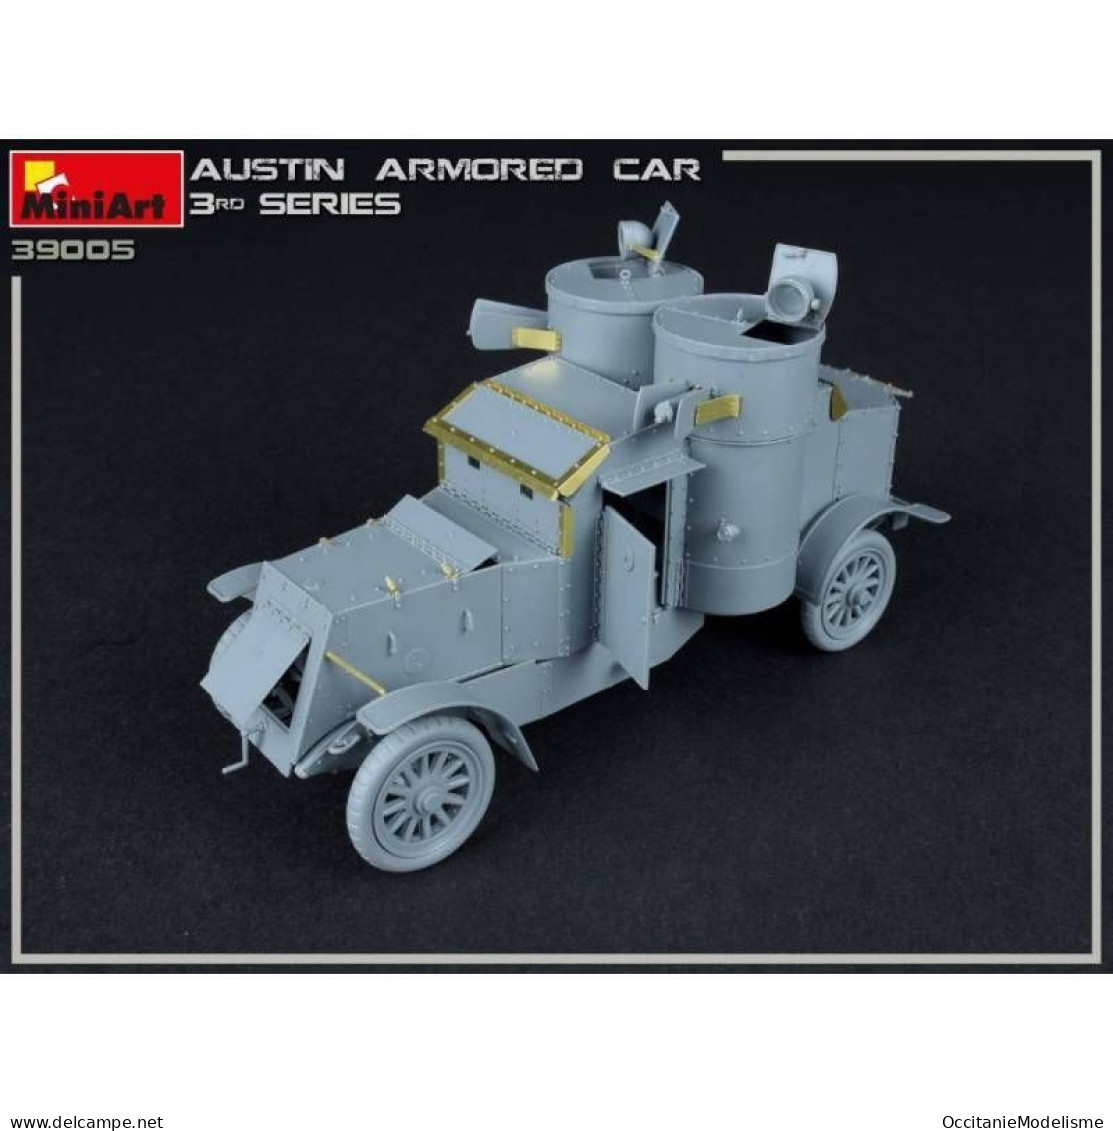 Miniart - AUSTIN ARMOURED CAR 3rd Series Maquette Kit Plastique Réf. 39005 Neuf NBO 1/35 - Véhicules Militaires